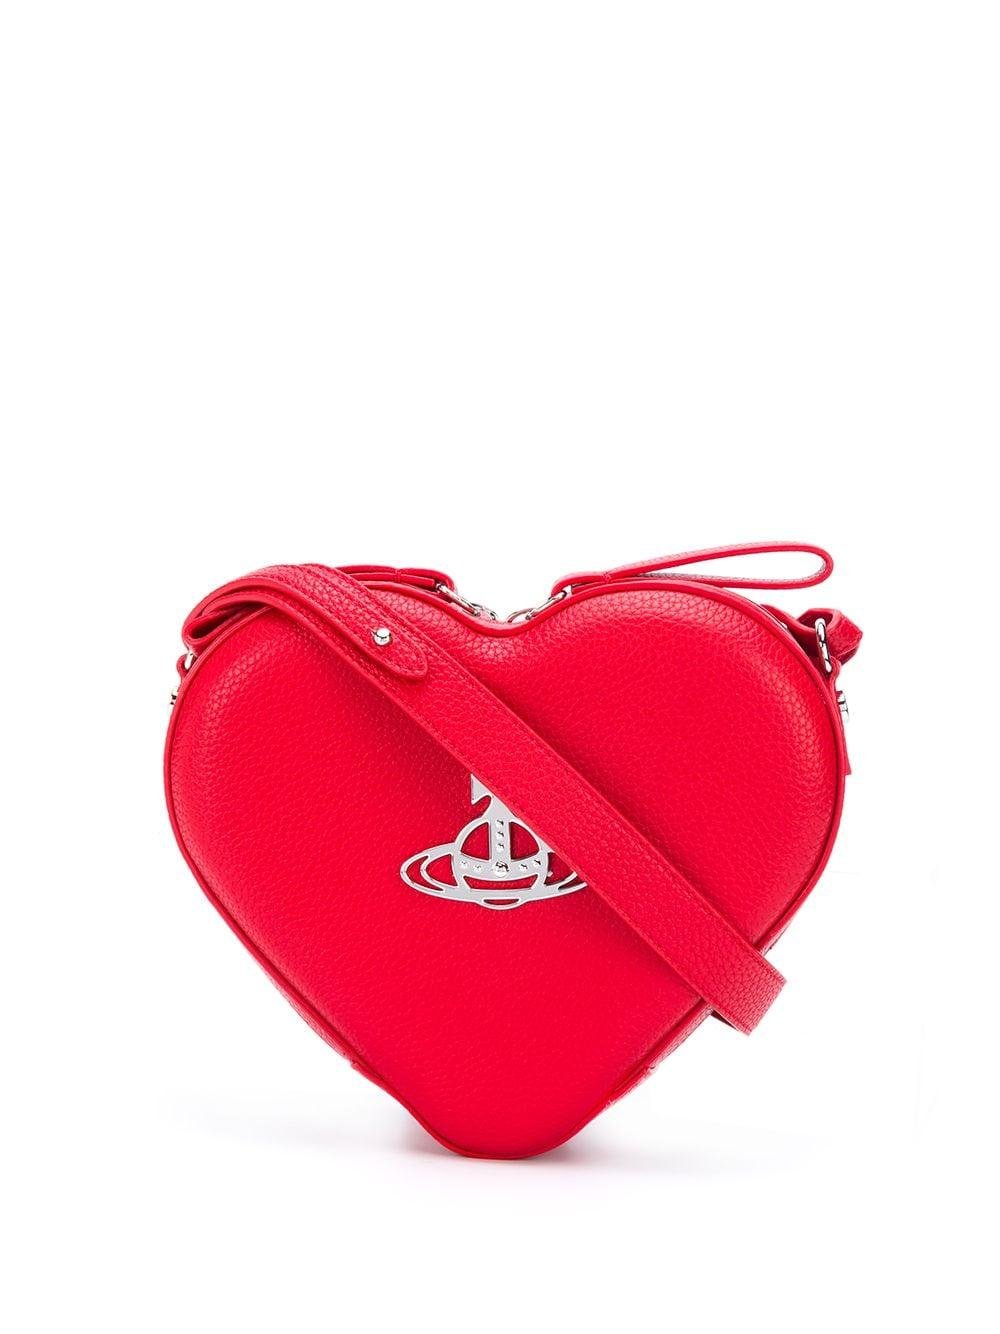 Vivienne Westwood Josephine Heart Cross Body Bag in Red